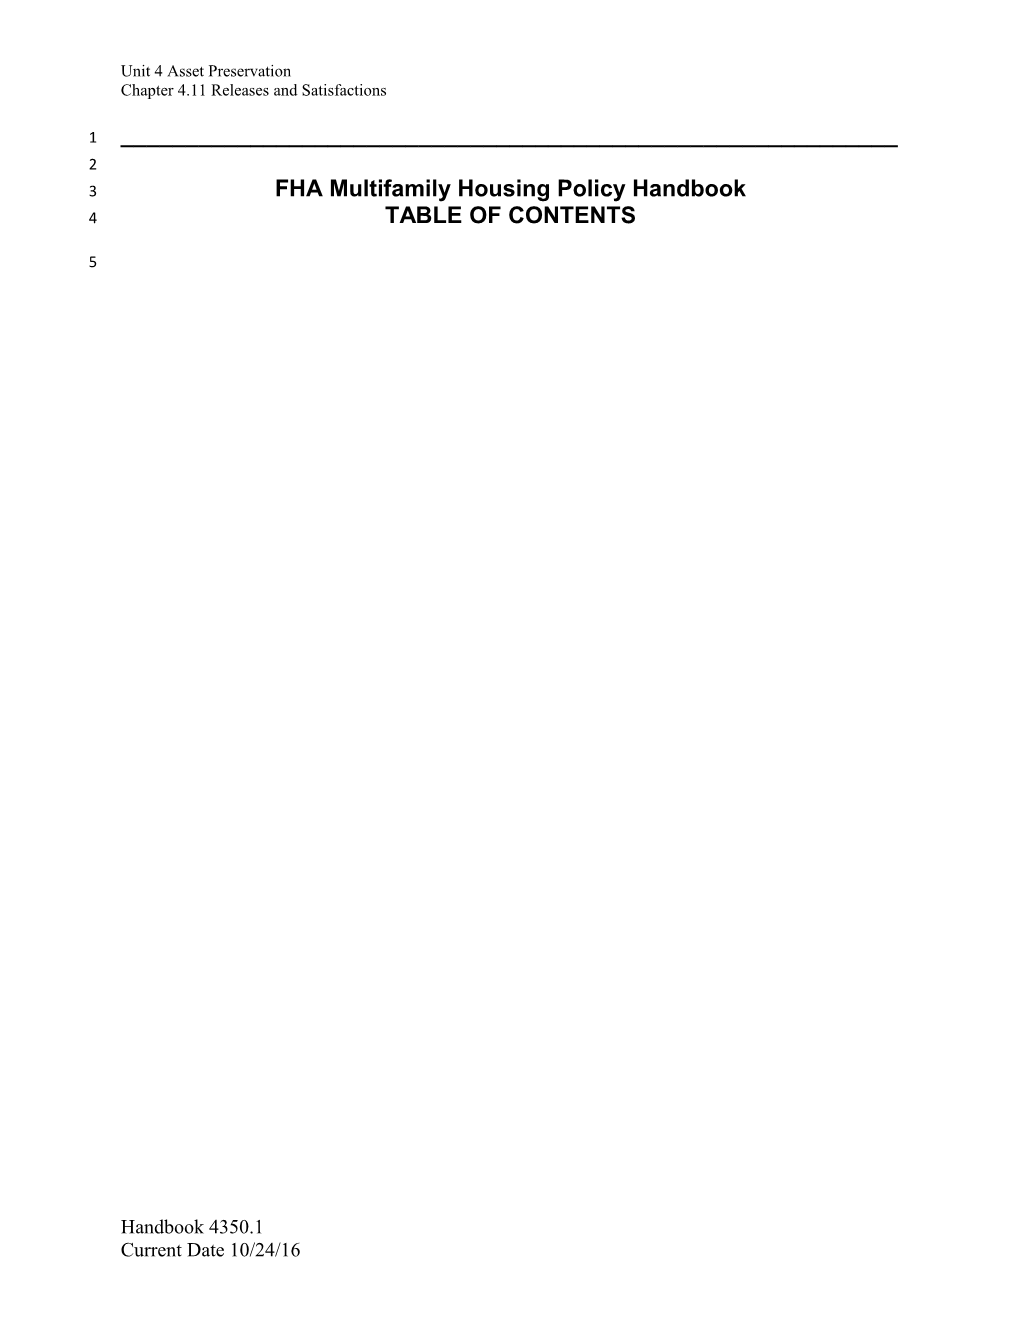 FHA Multifamily Housing Policy Handbook